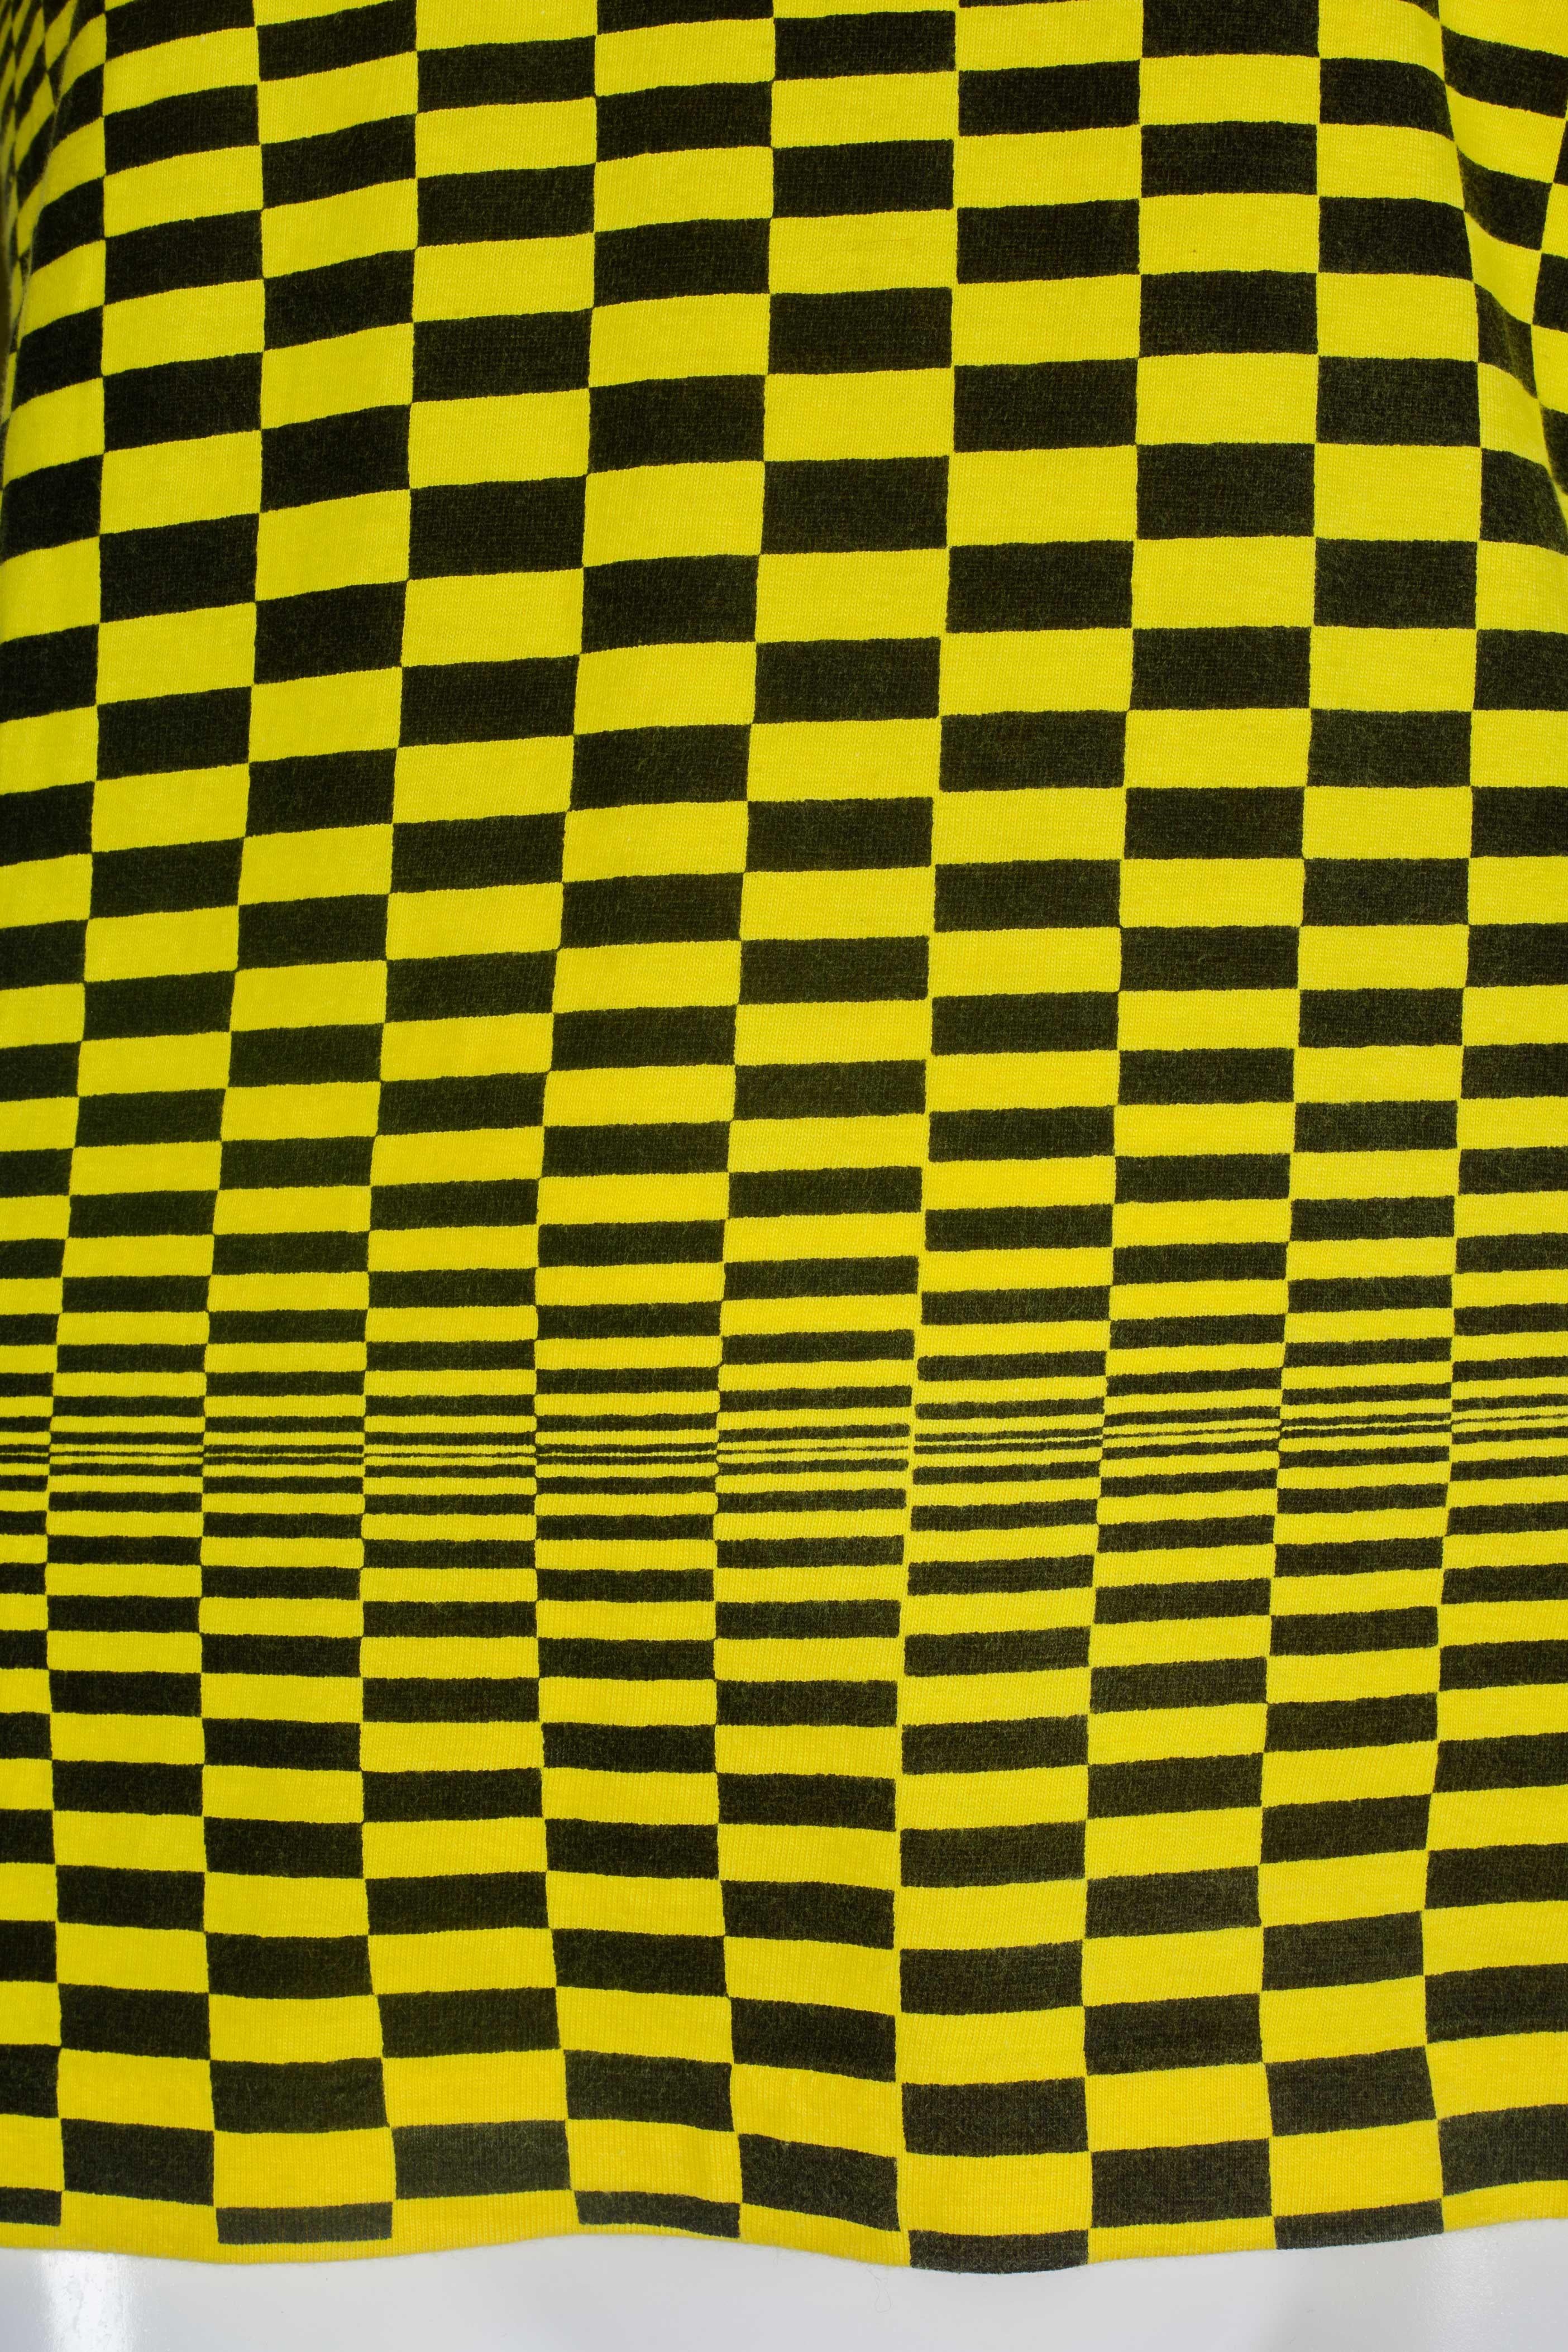 Comme des Garçons Yellow and Black Checkered T-shirt, 2000 2